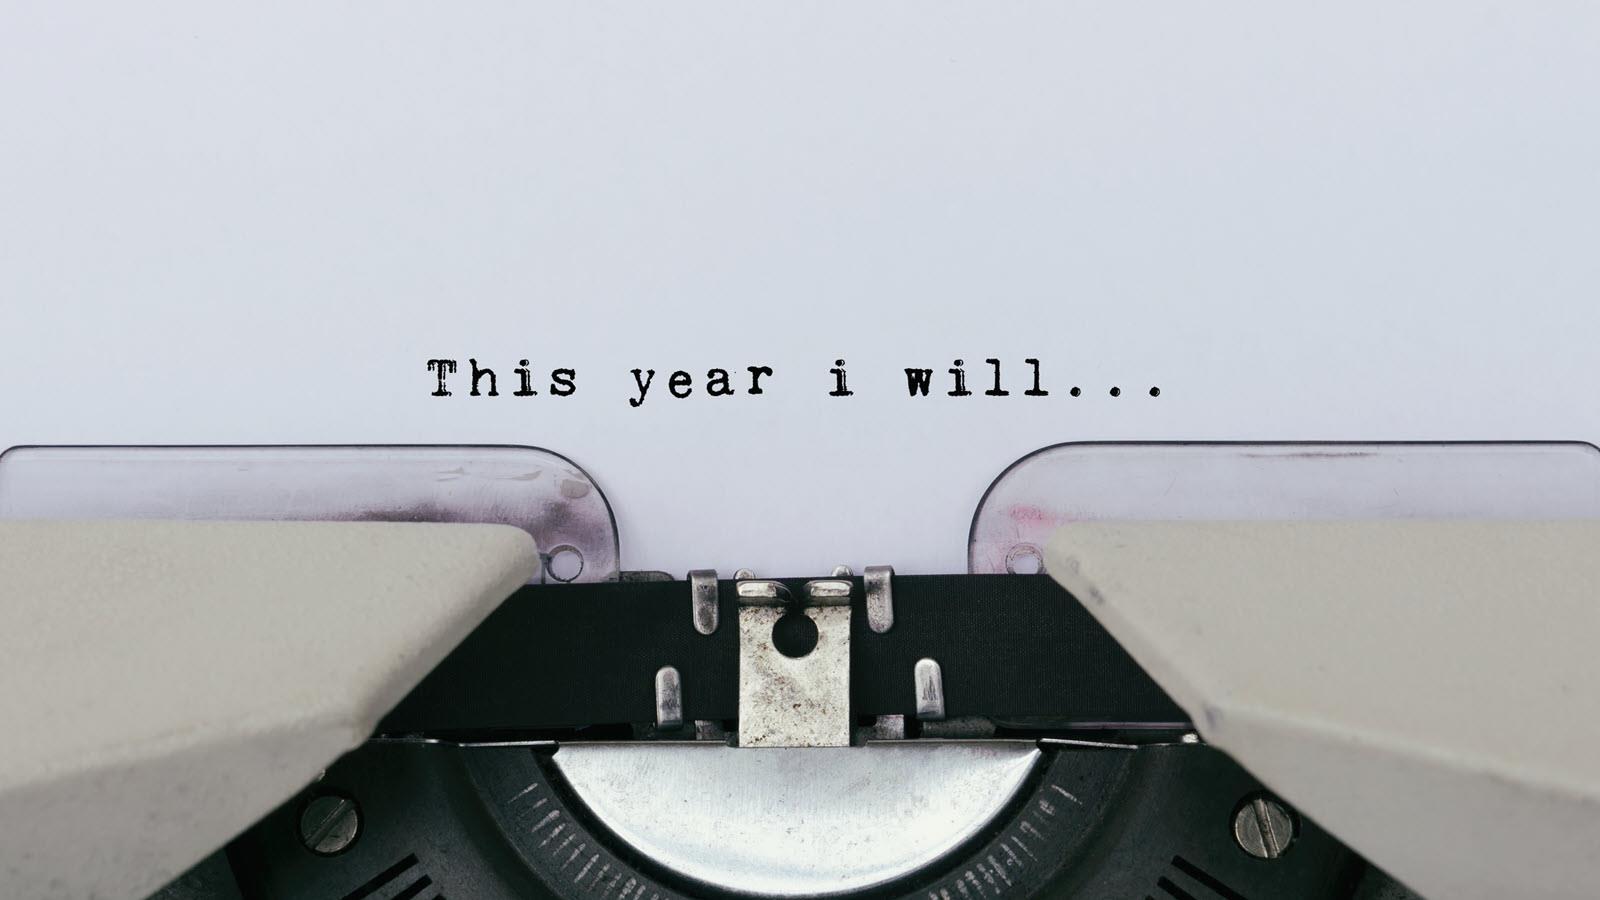 Typewritten phrase "This year I will..."